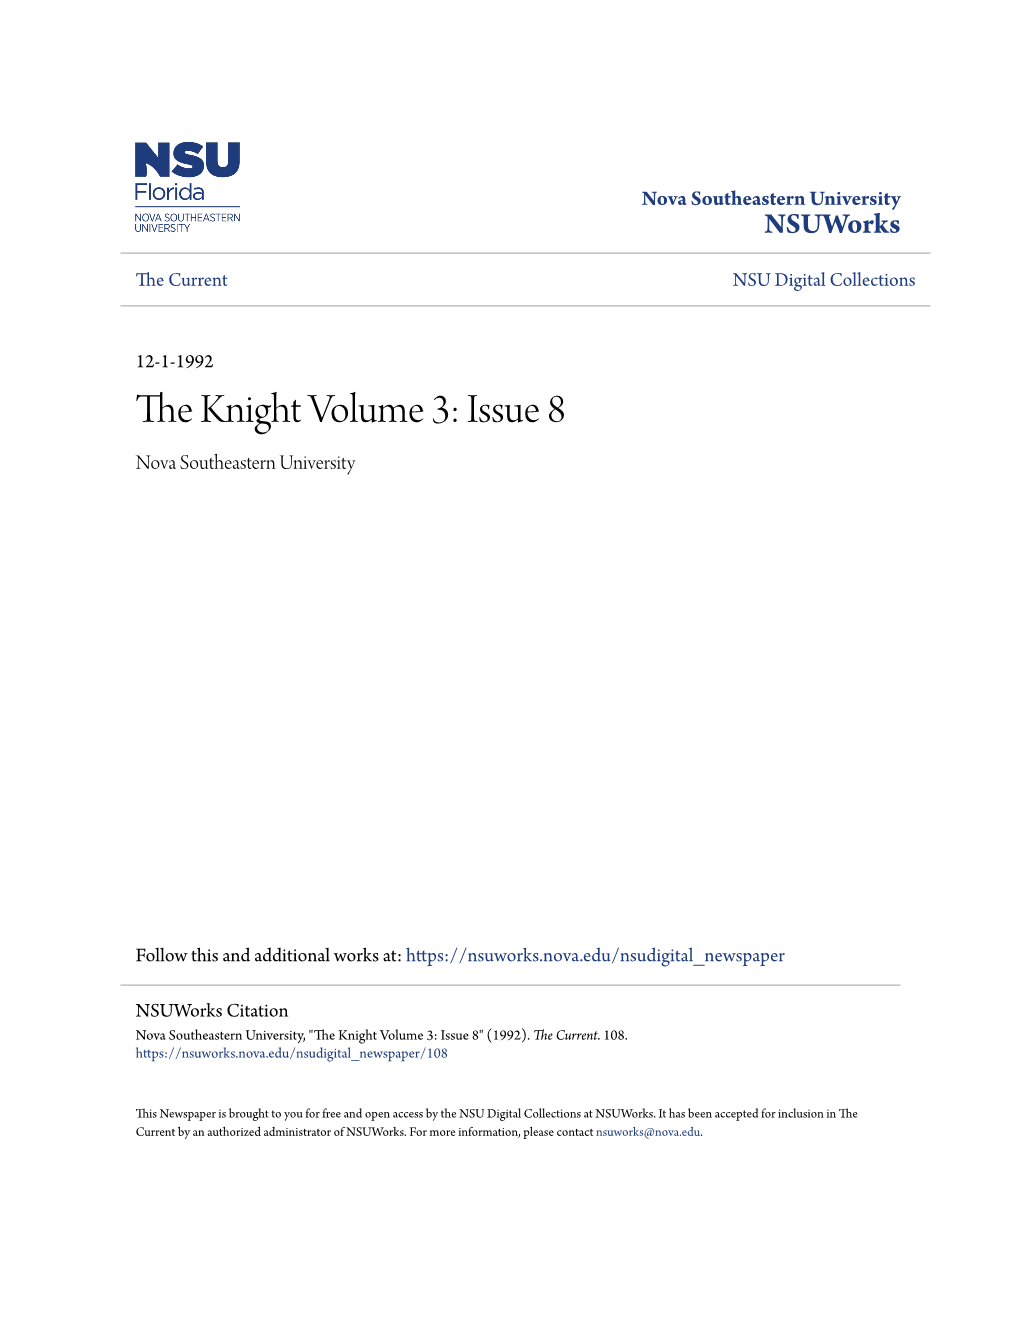 The Knight Volume 3: Issue 8 Nova Southeastern University